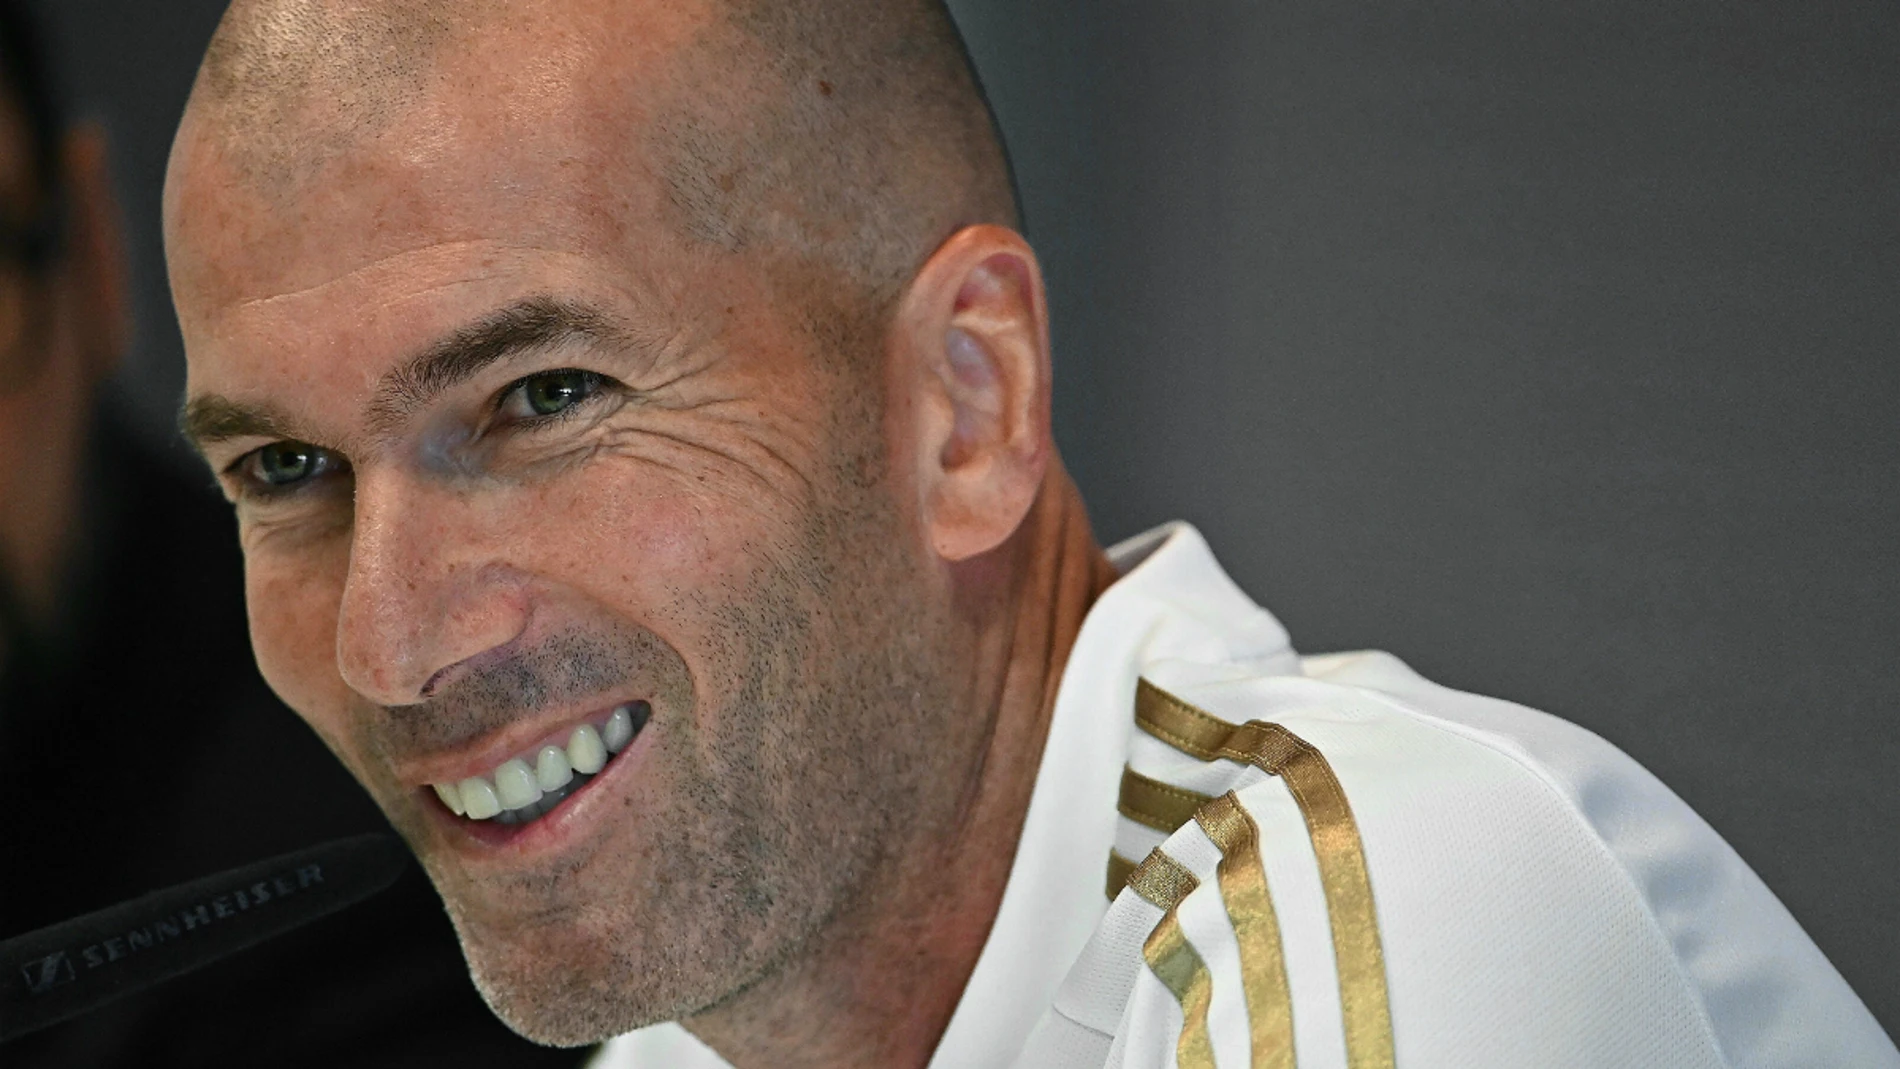 Zidane, sonriente